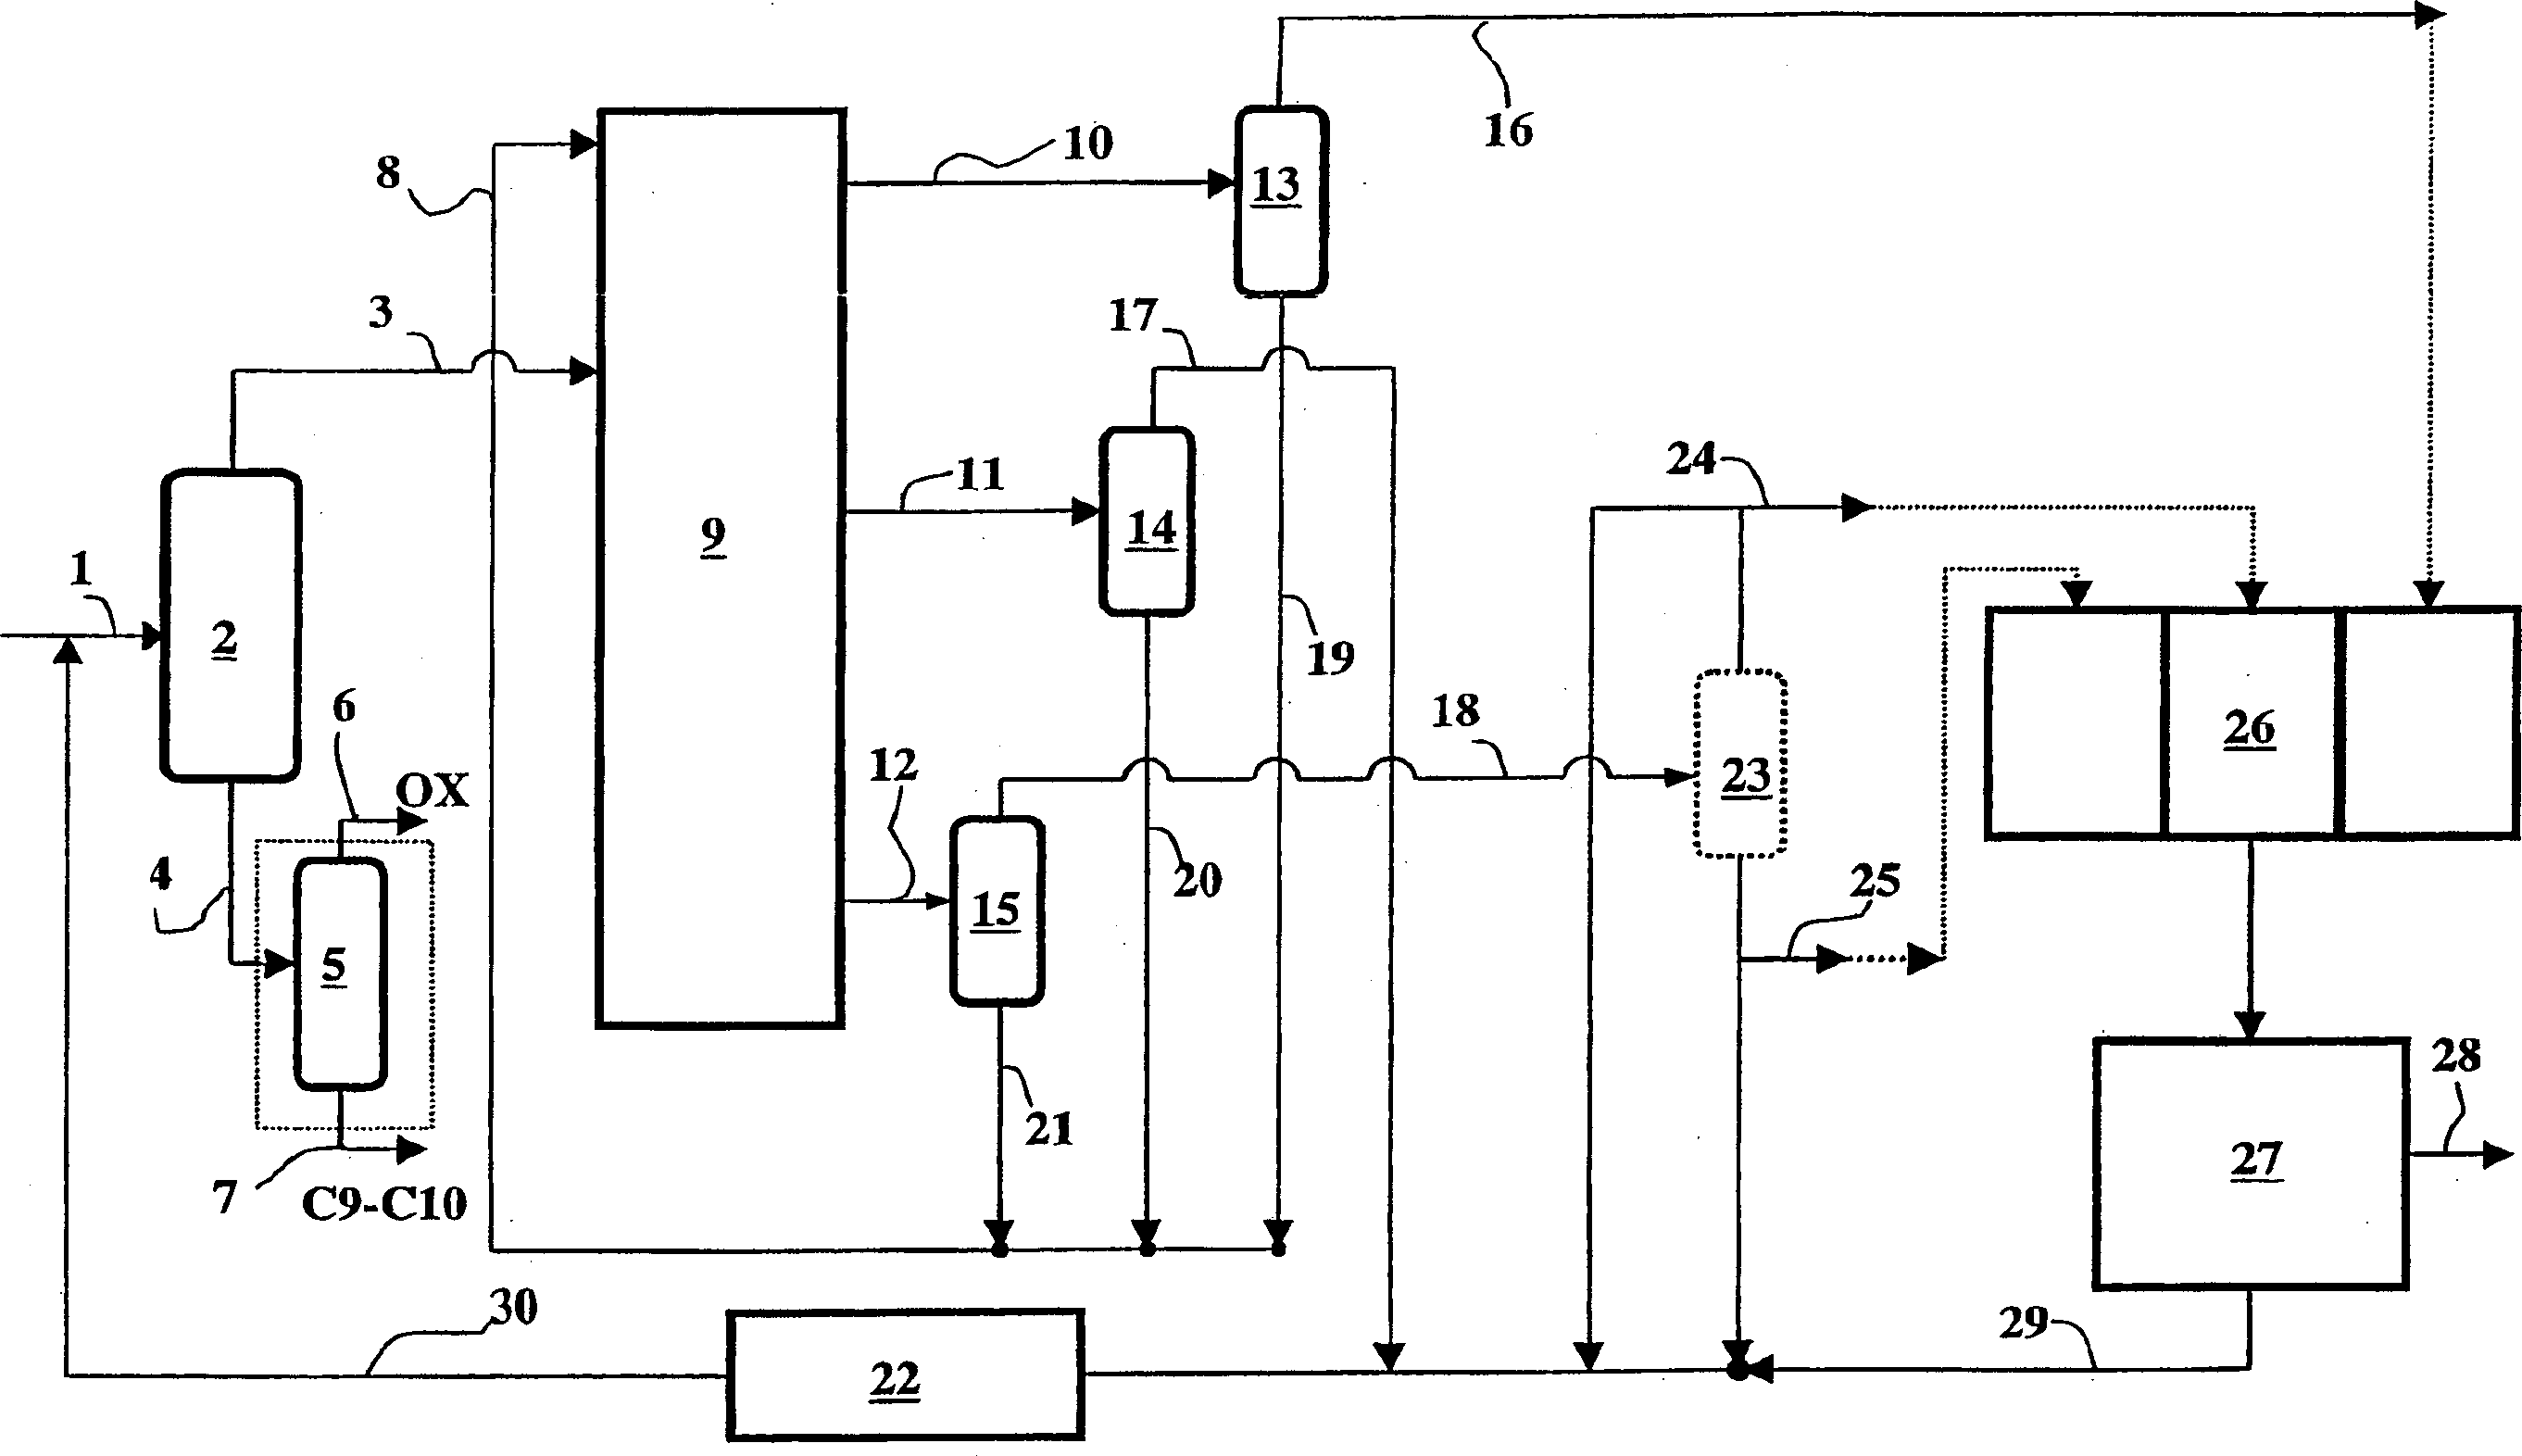 Co-production method for dimethyl benzene, meta dimethyl benzene and/or ortho dimethyl benzene